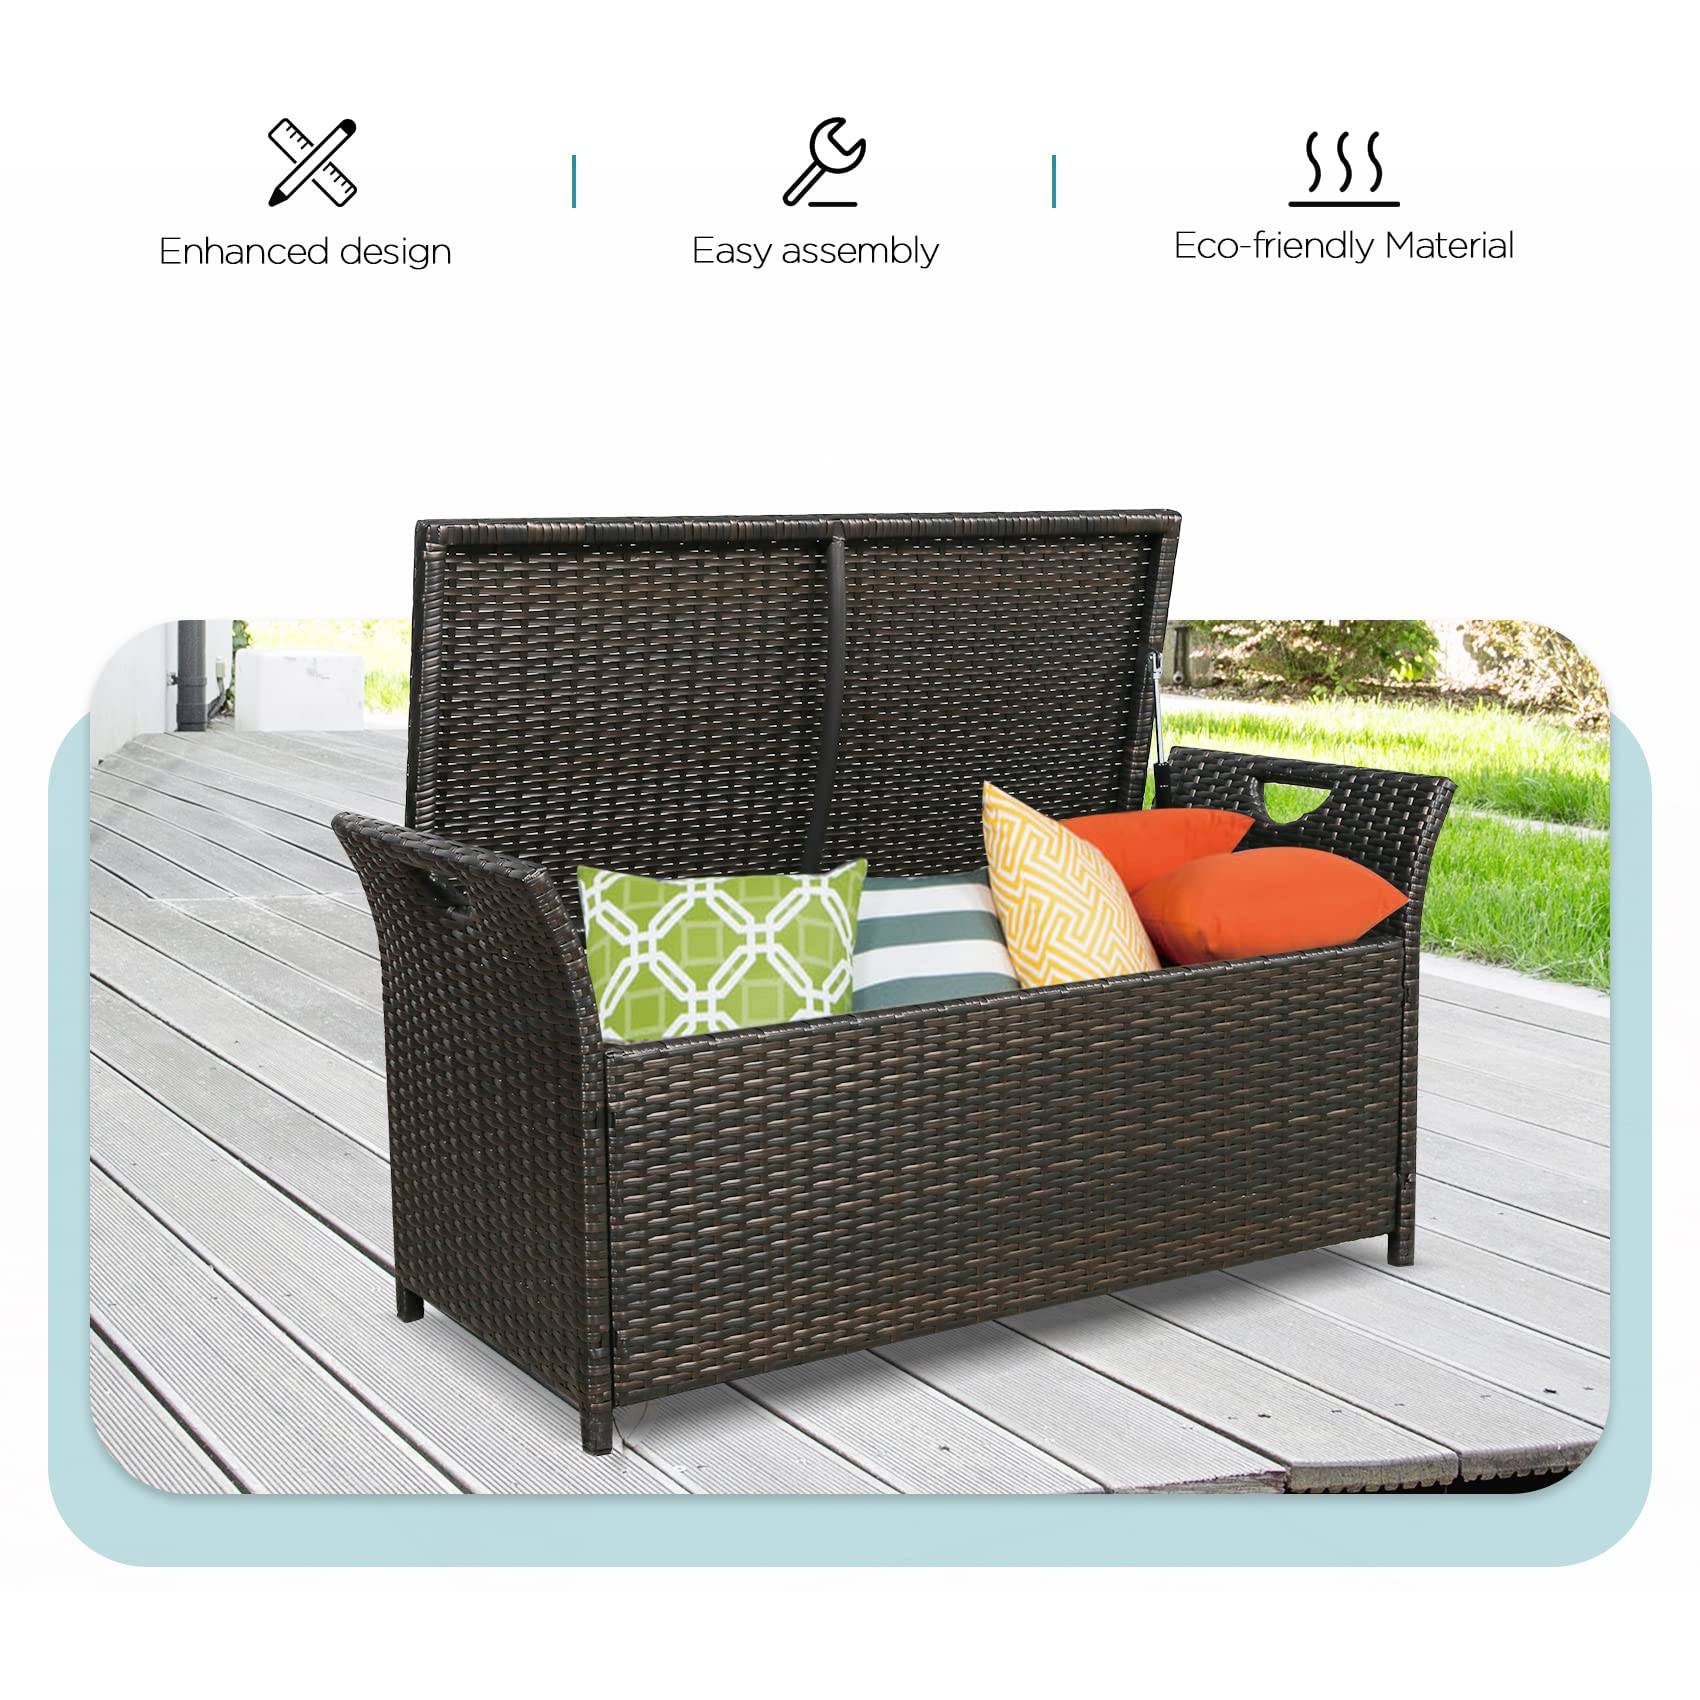 Ulax Furniture Outdoor Storage Bench, Deck Box for Patio Furniture, Rattan Style Deck Box w/Cushion (Beige)